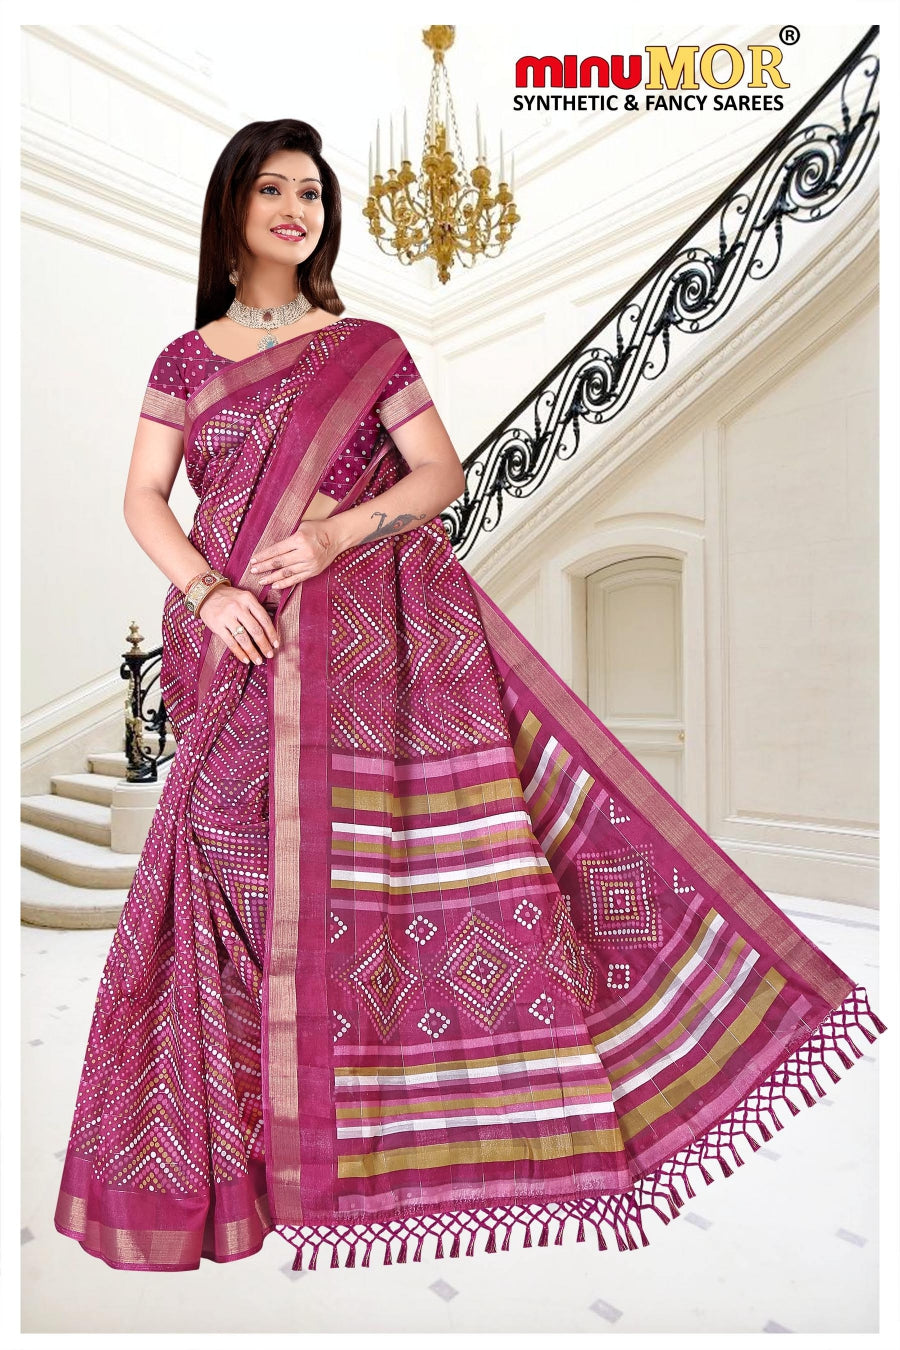 woman wearing fancy sarees for Diwali